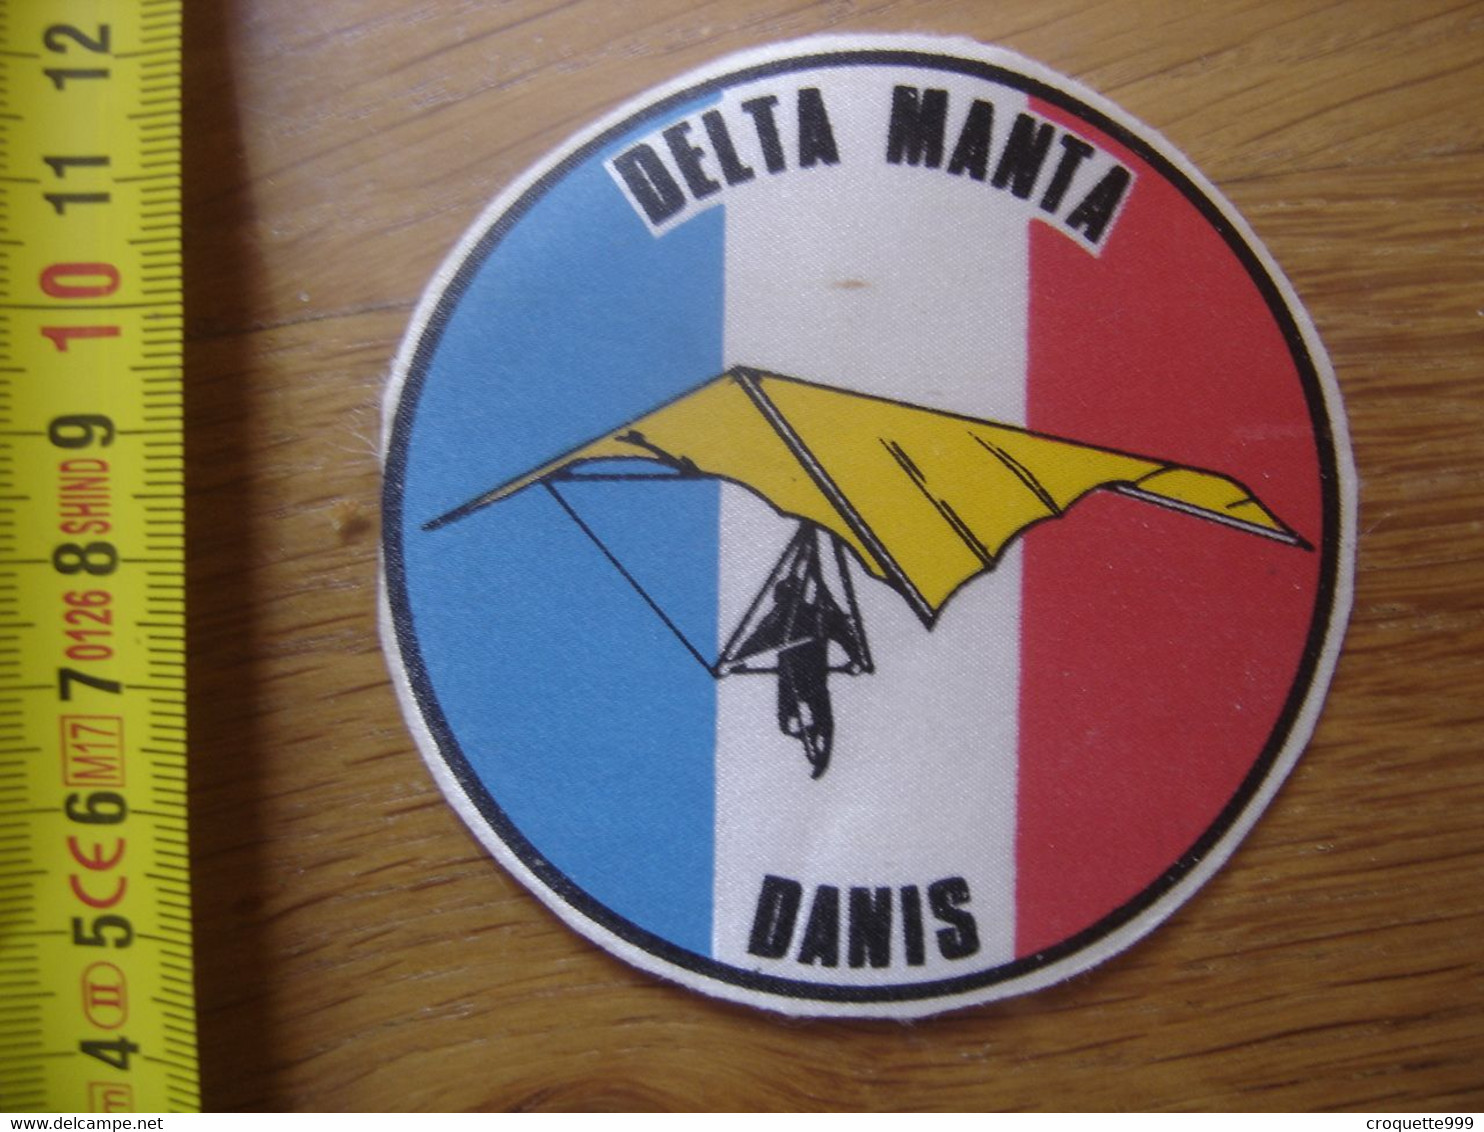 Ecusson Patch DELTA MANTA DANIS Bleu Blanc Rouge - Fallschirmspringen